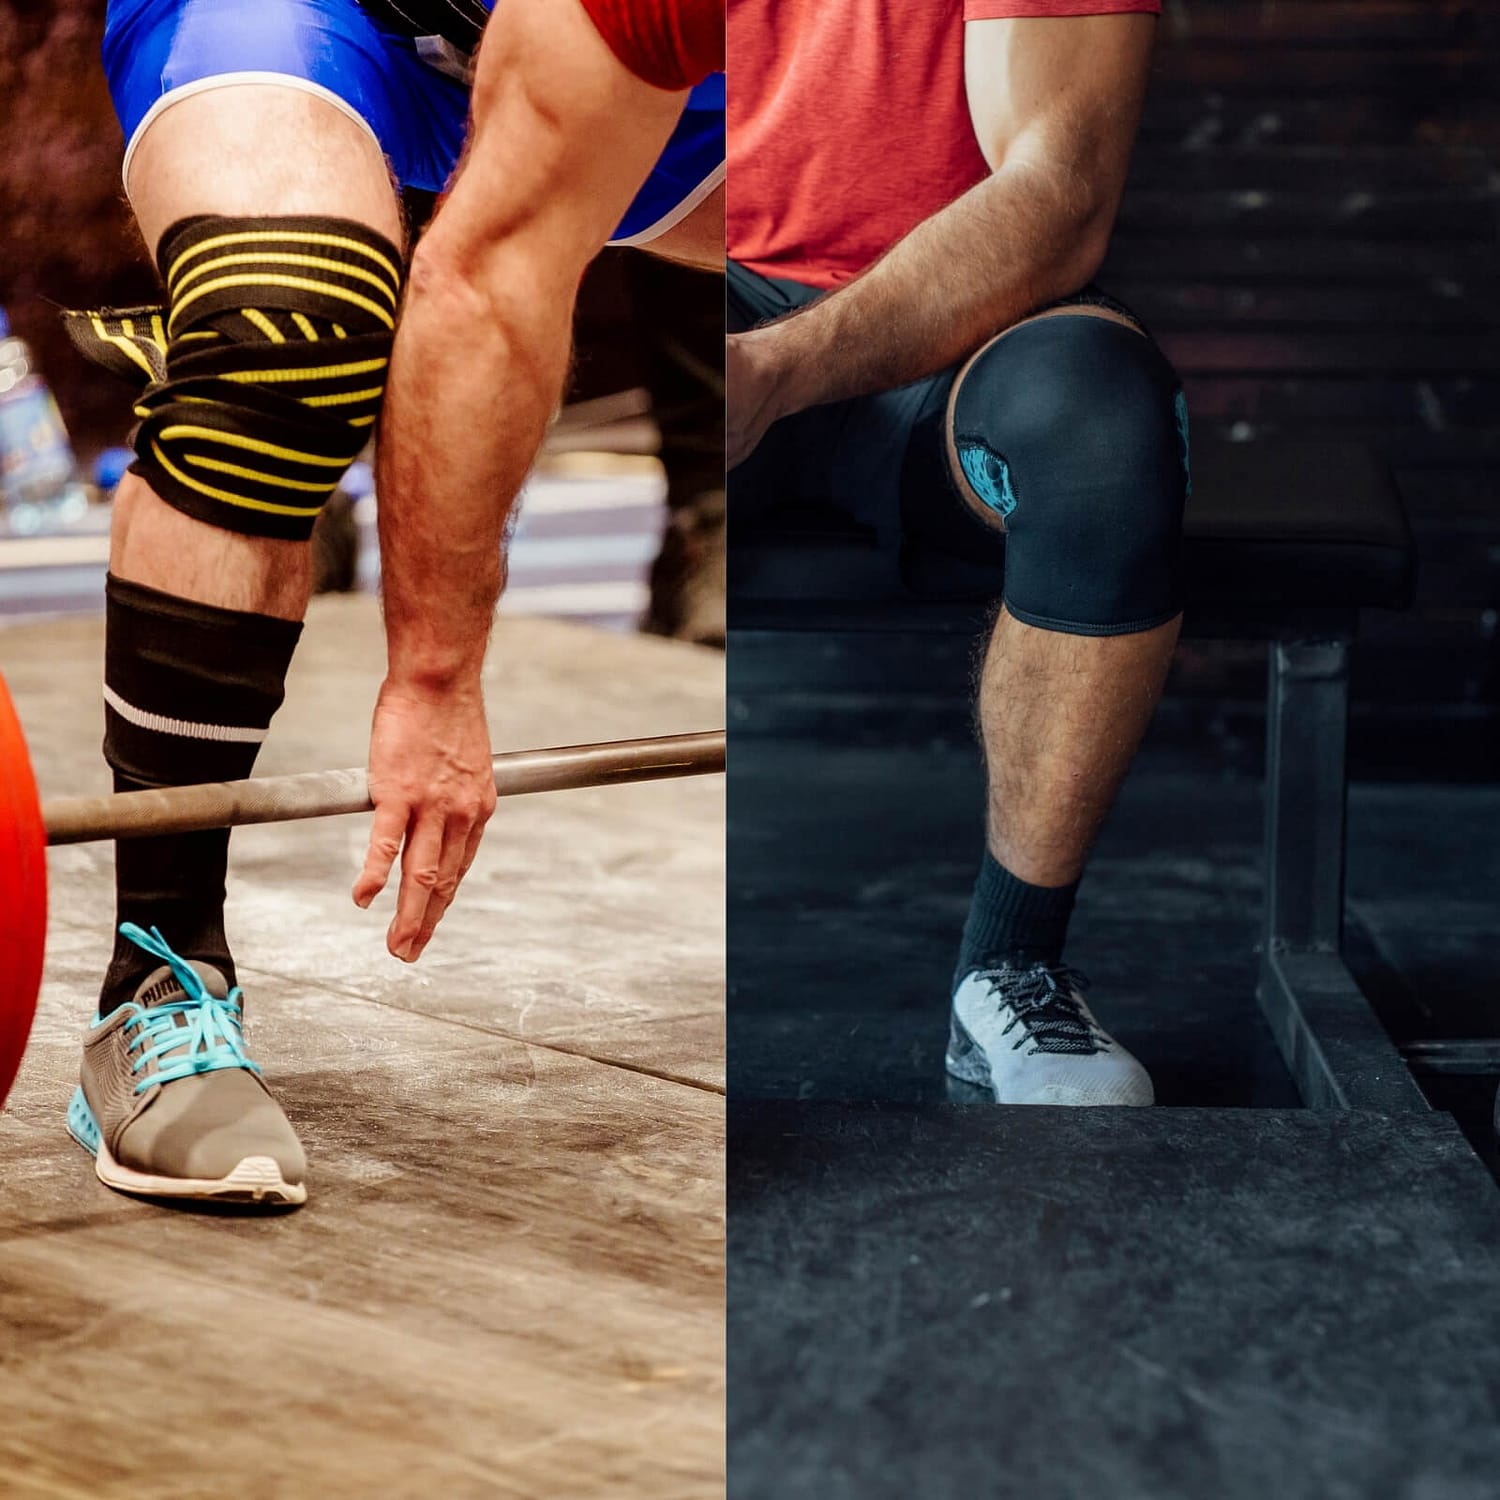 Knee Wraps vs Knee Sleeves for Squatting